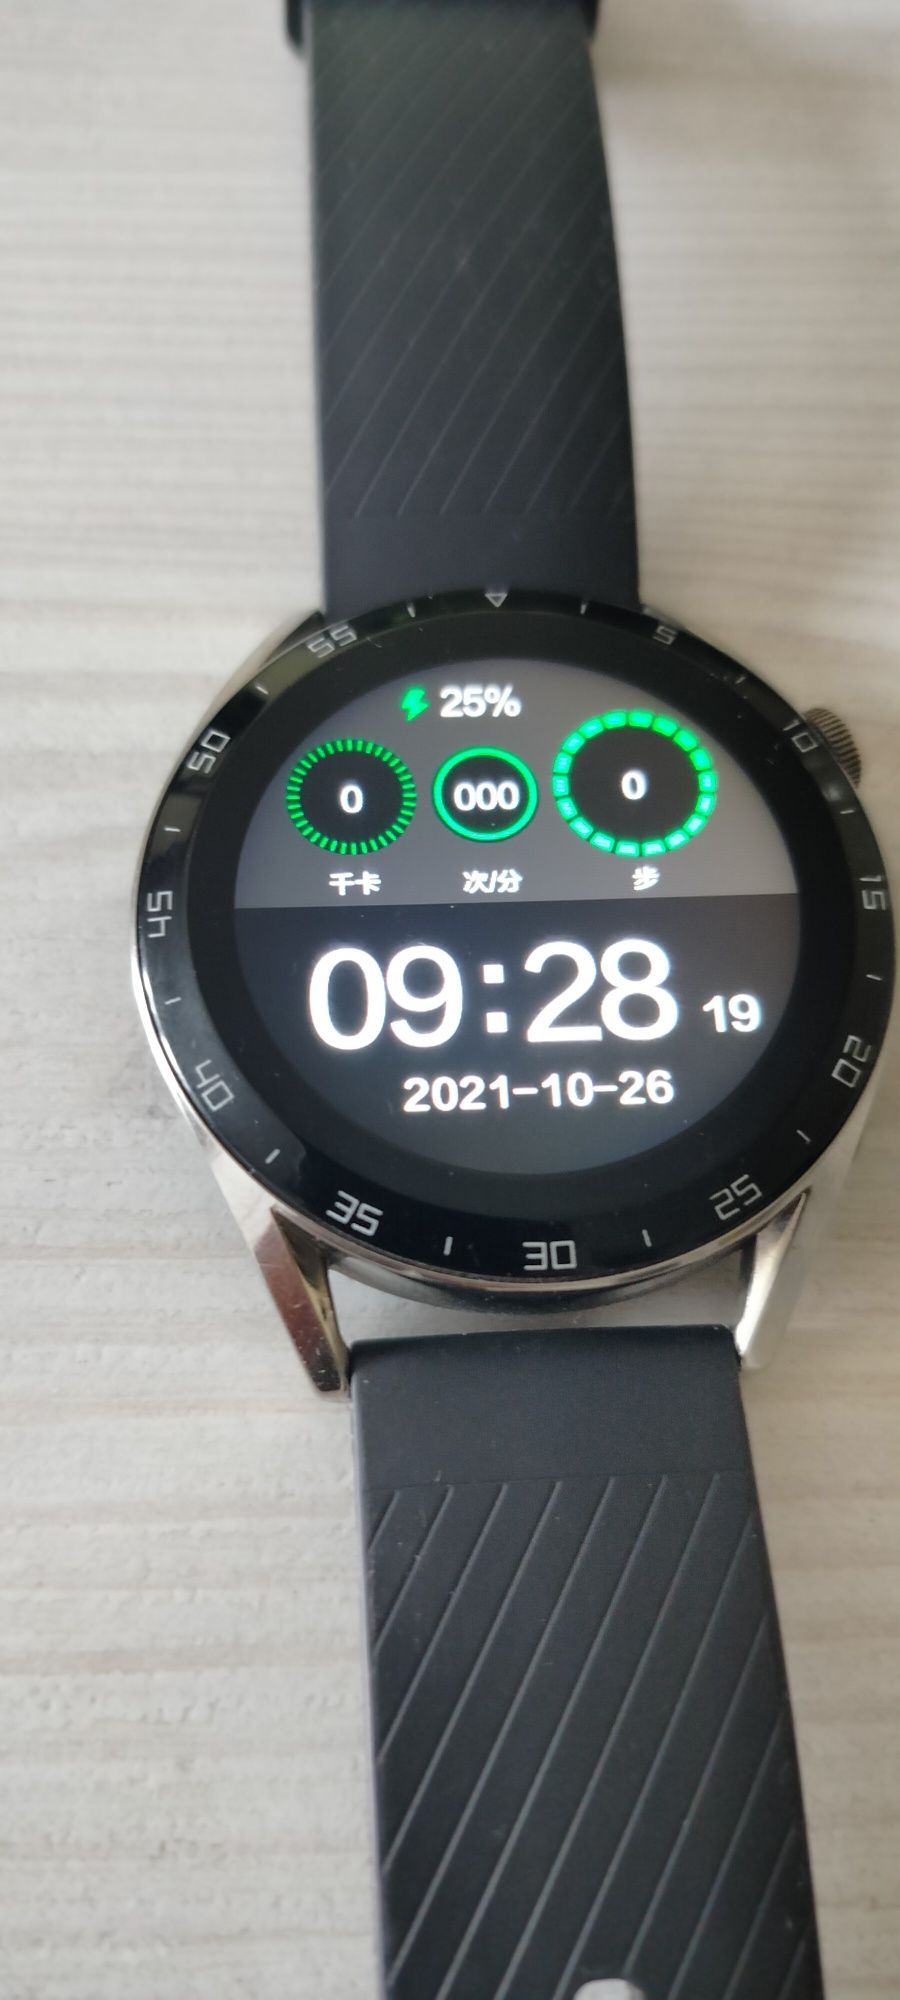 Smartwatch pacyfic 42